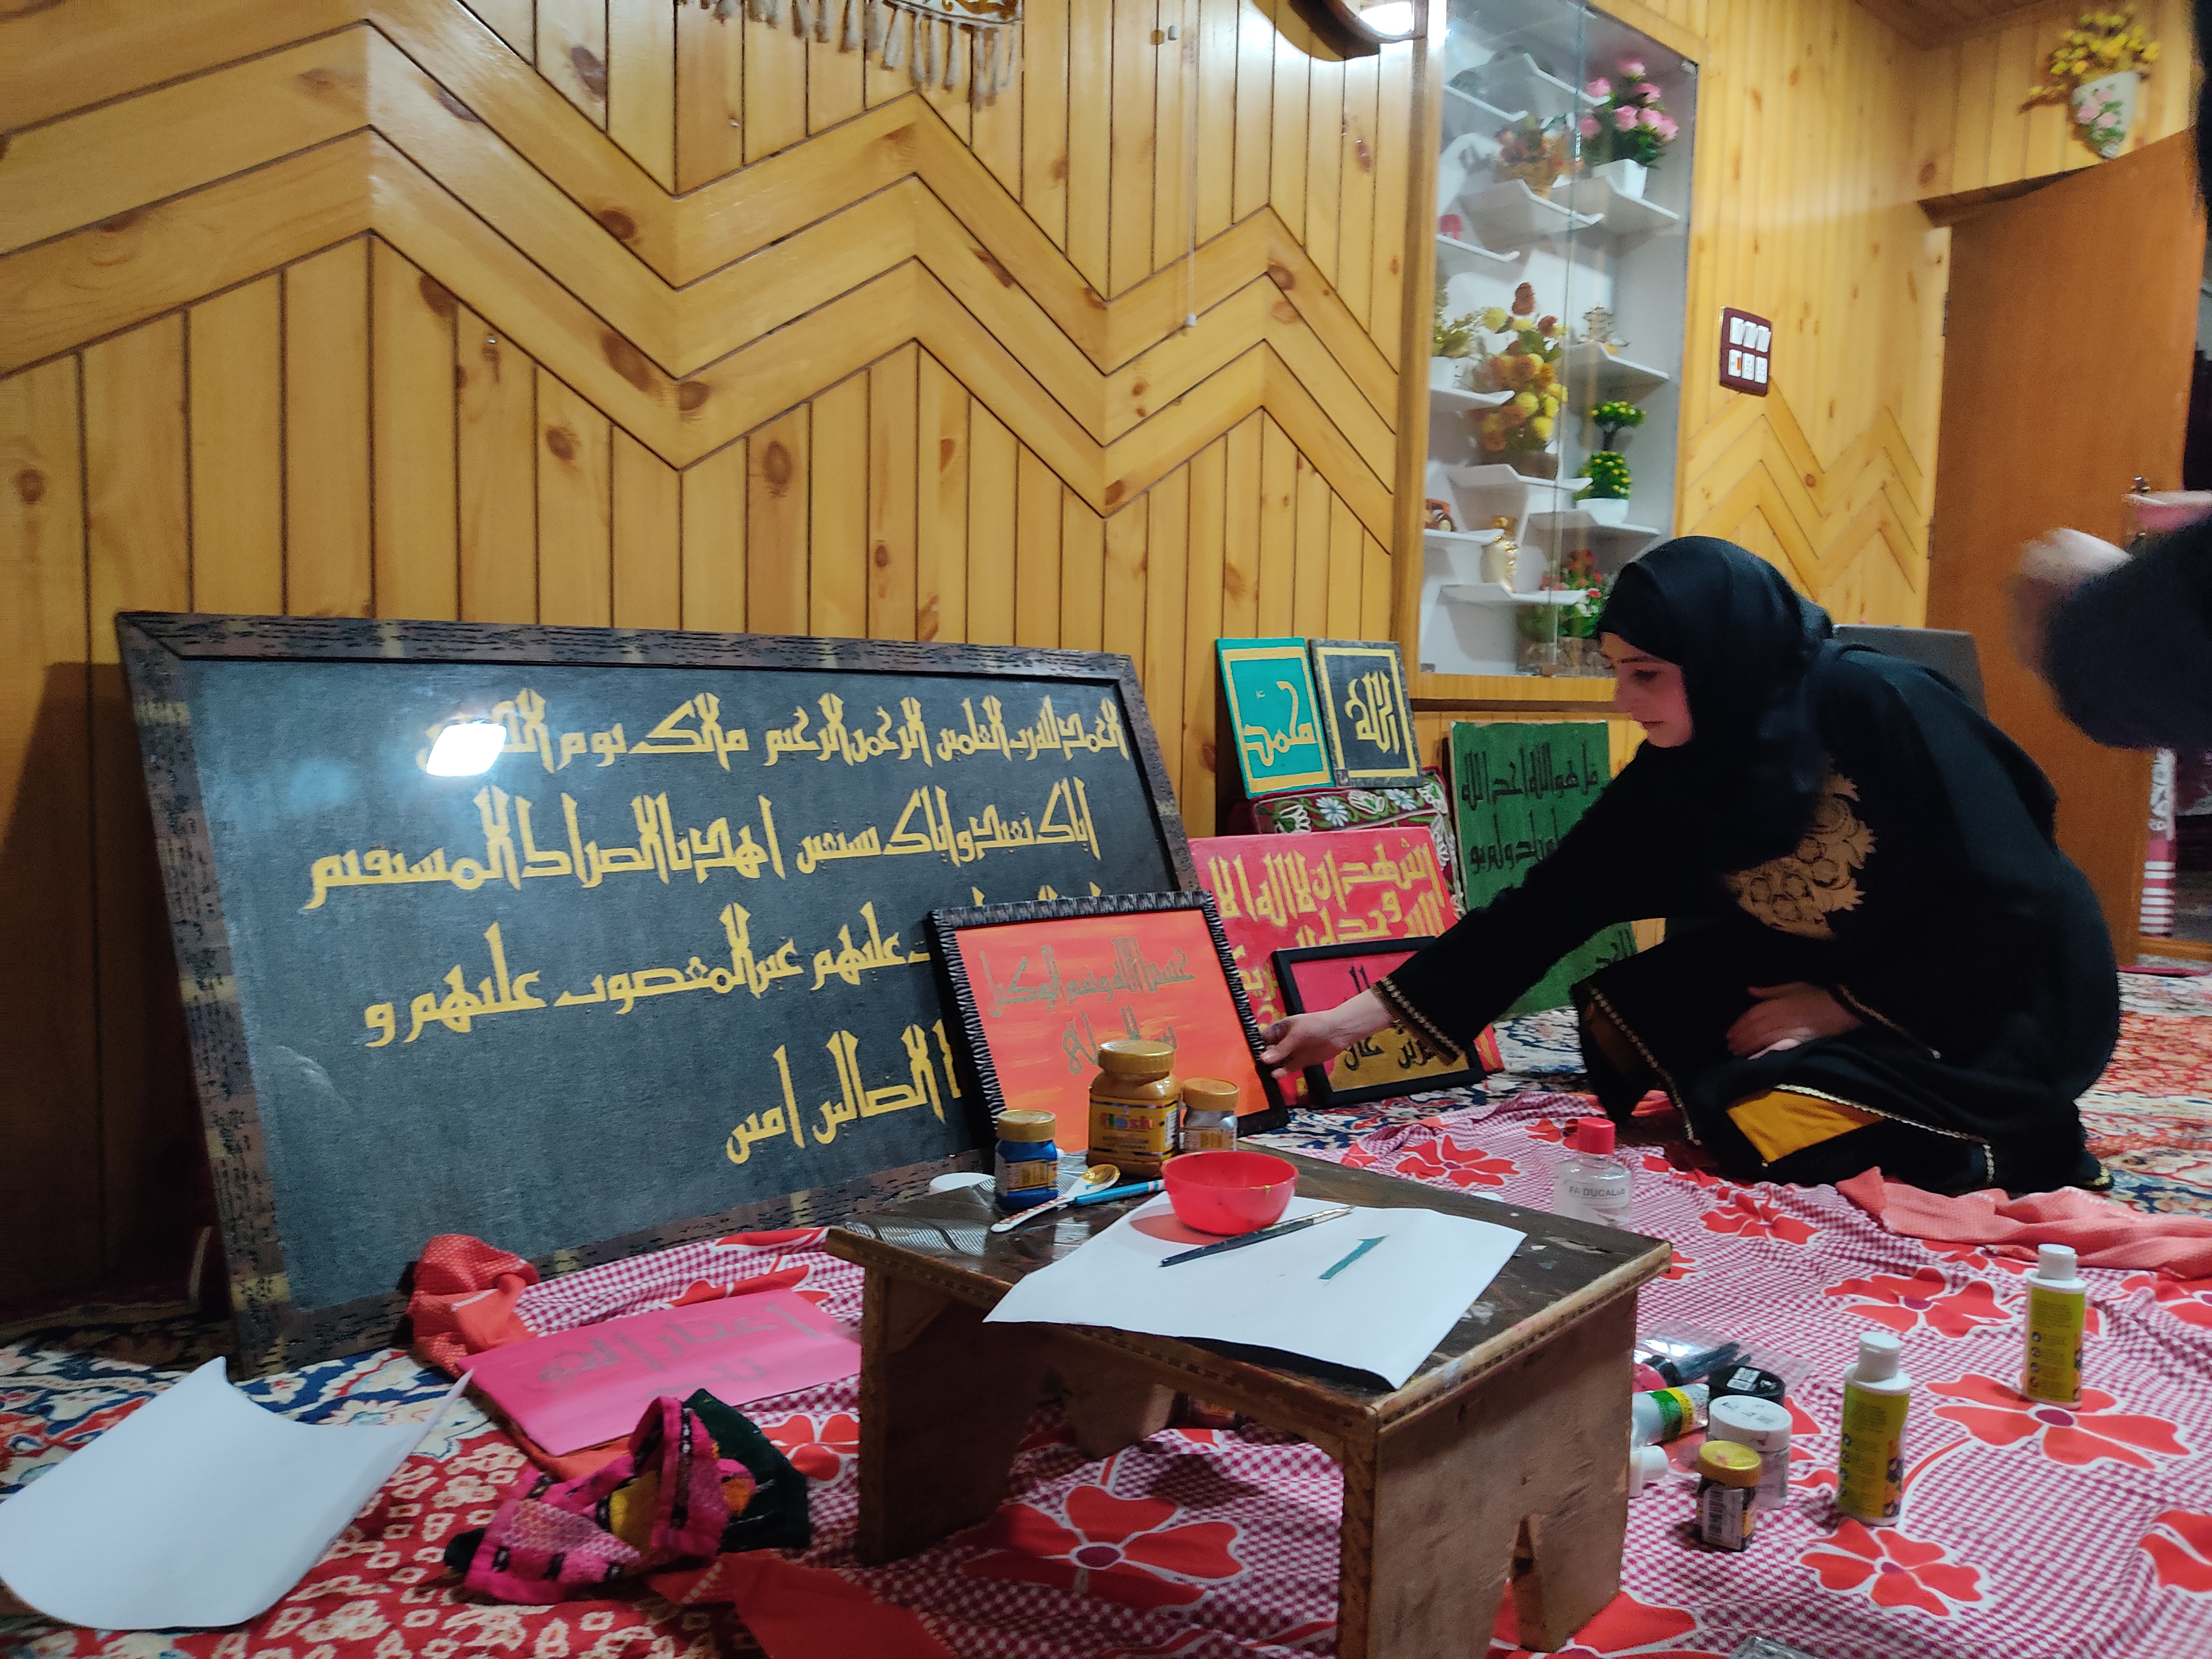 Calligrapher Farah Deeba while writing on the painting walls